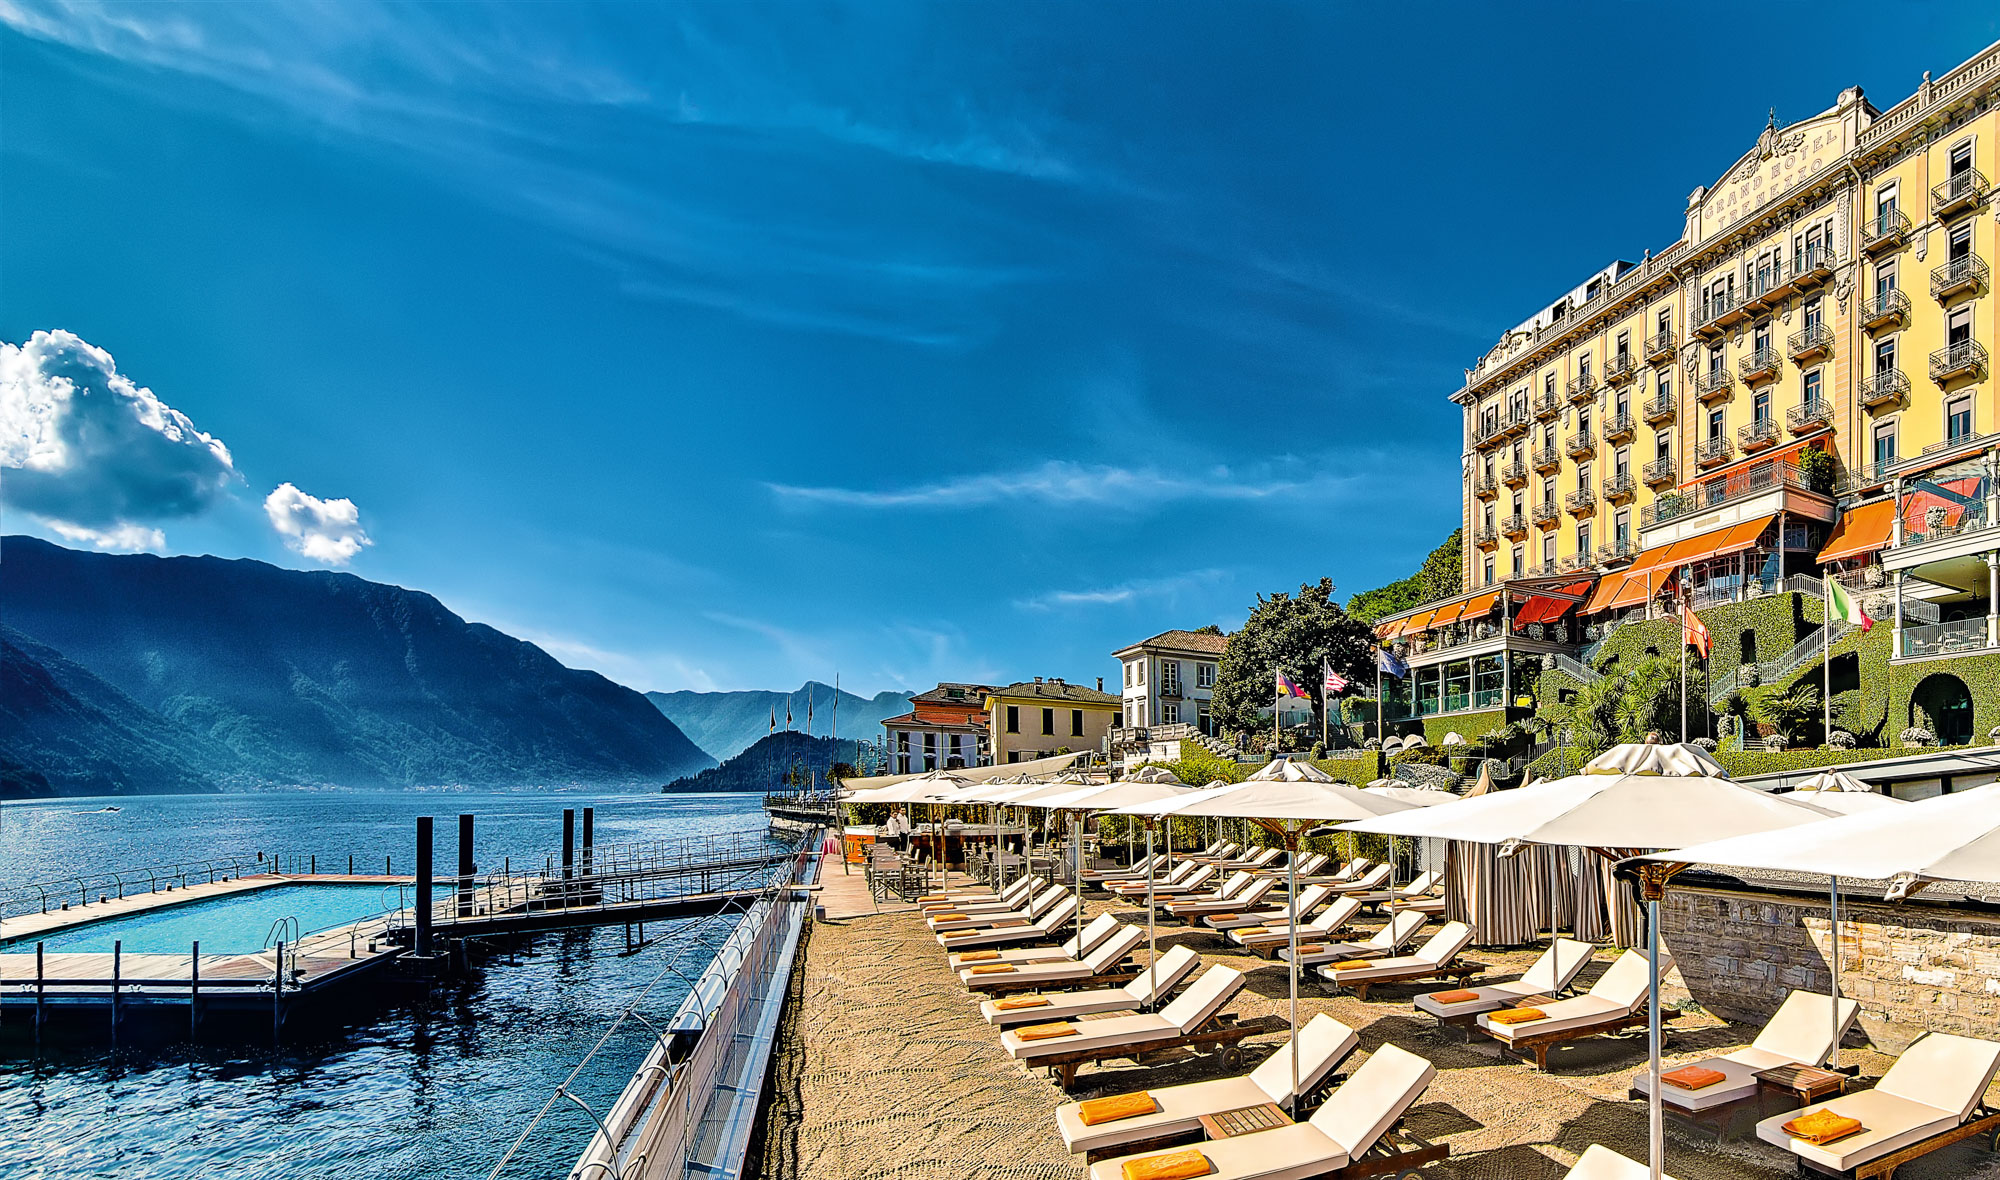 Grand Hotel Tremezzo beach loungers